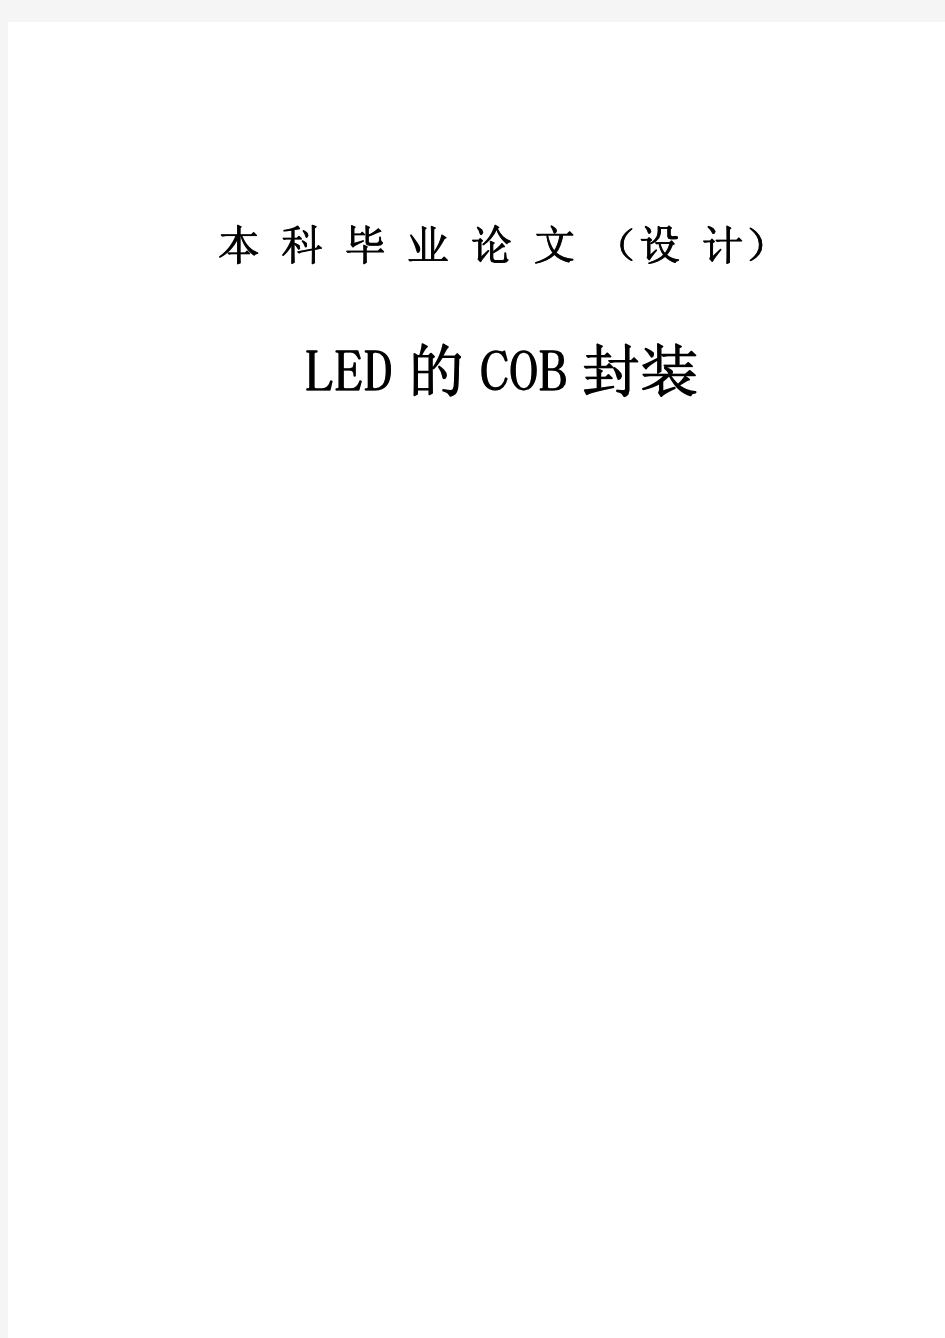 LED的COB封装